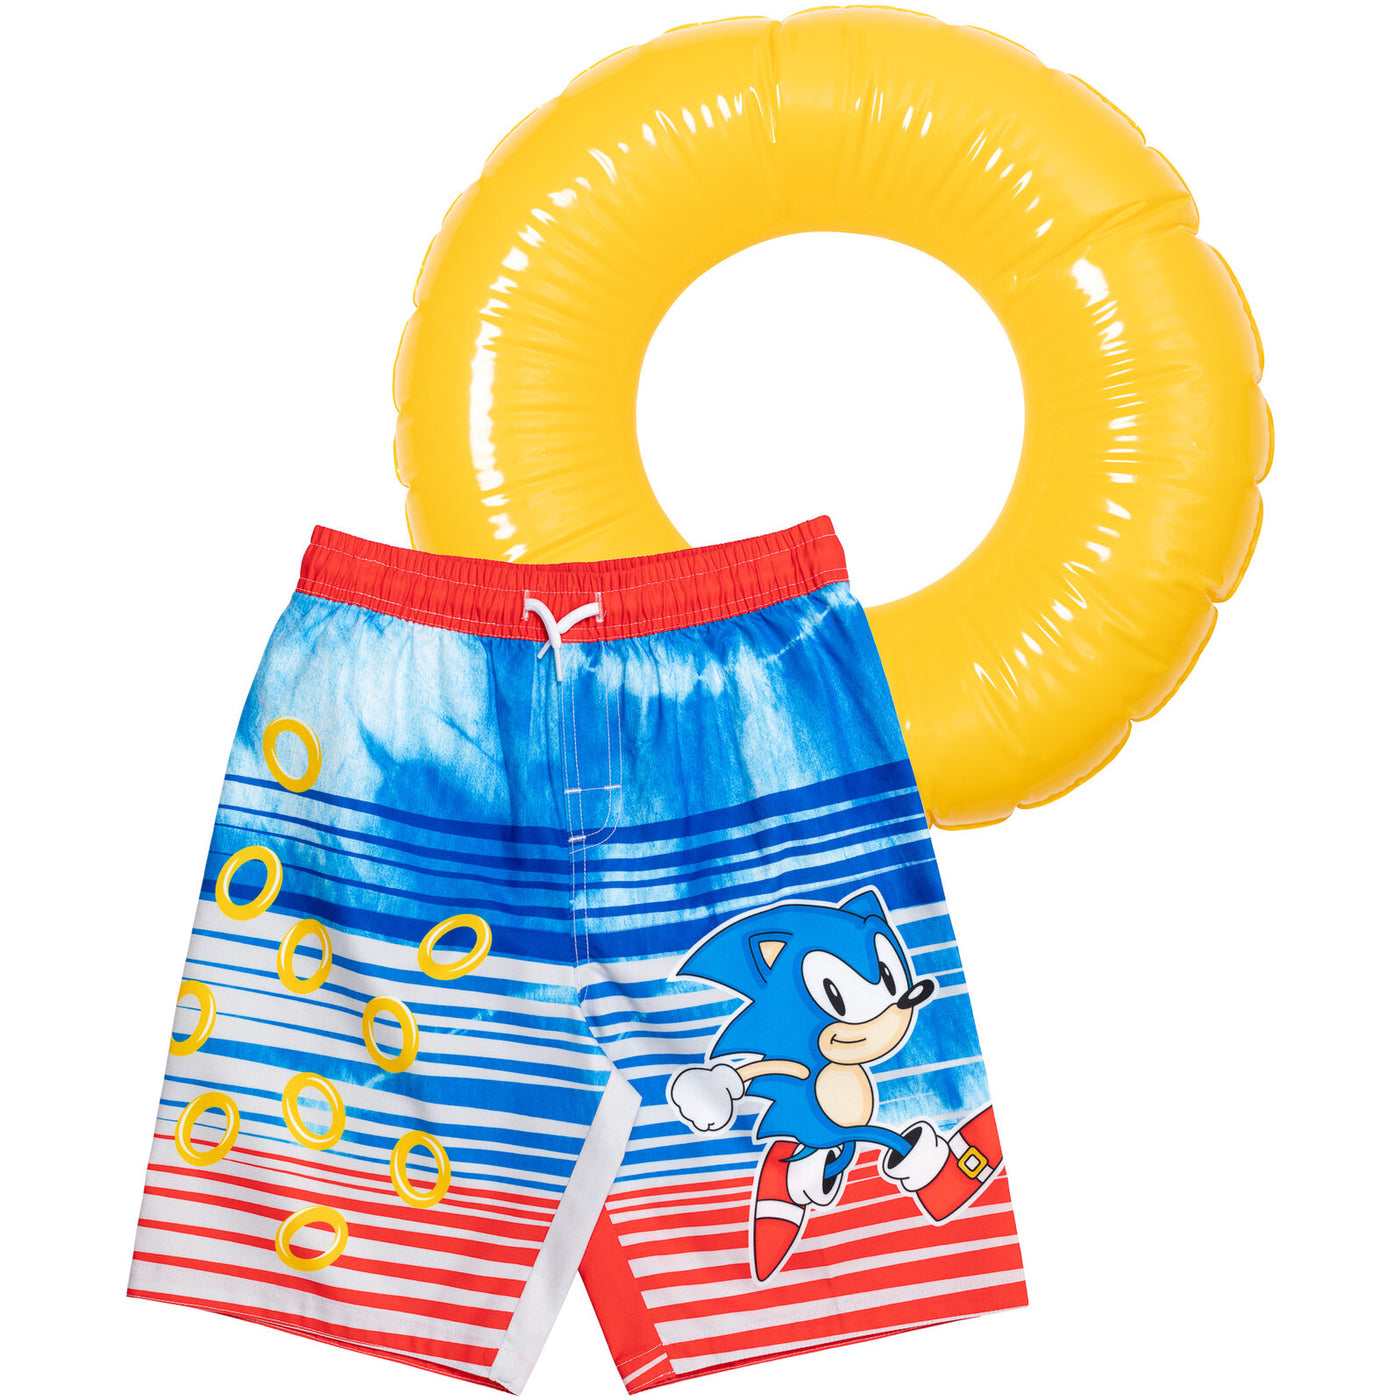 SEGA Sonic The Hedgehog Swim Trunks Bathing Suit